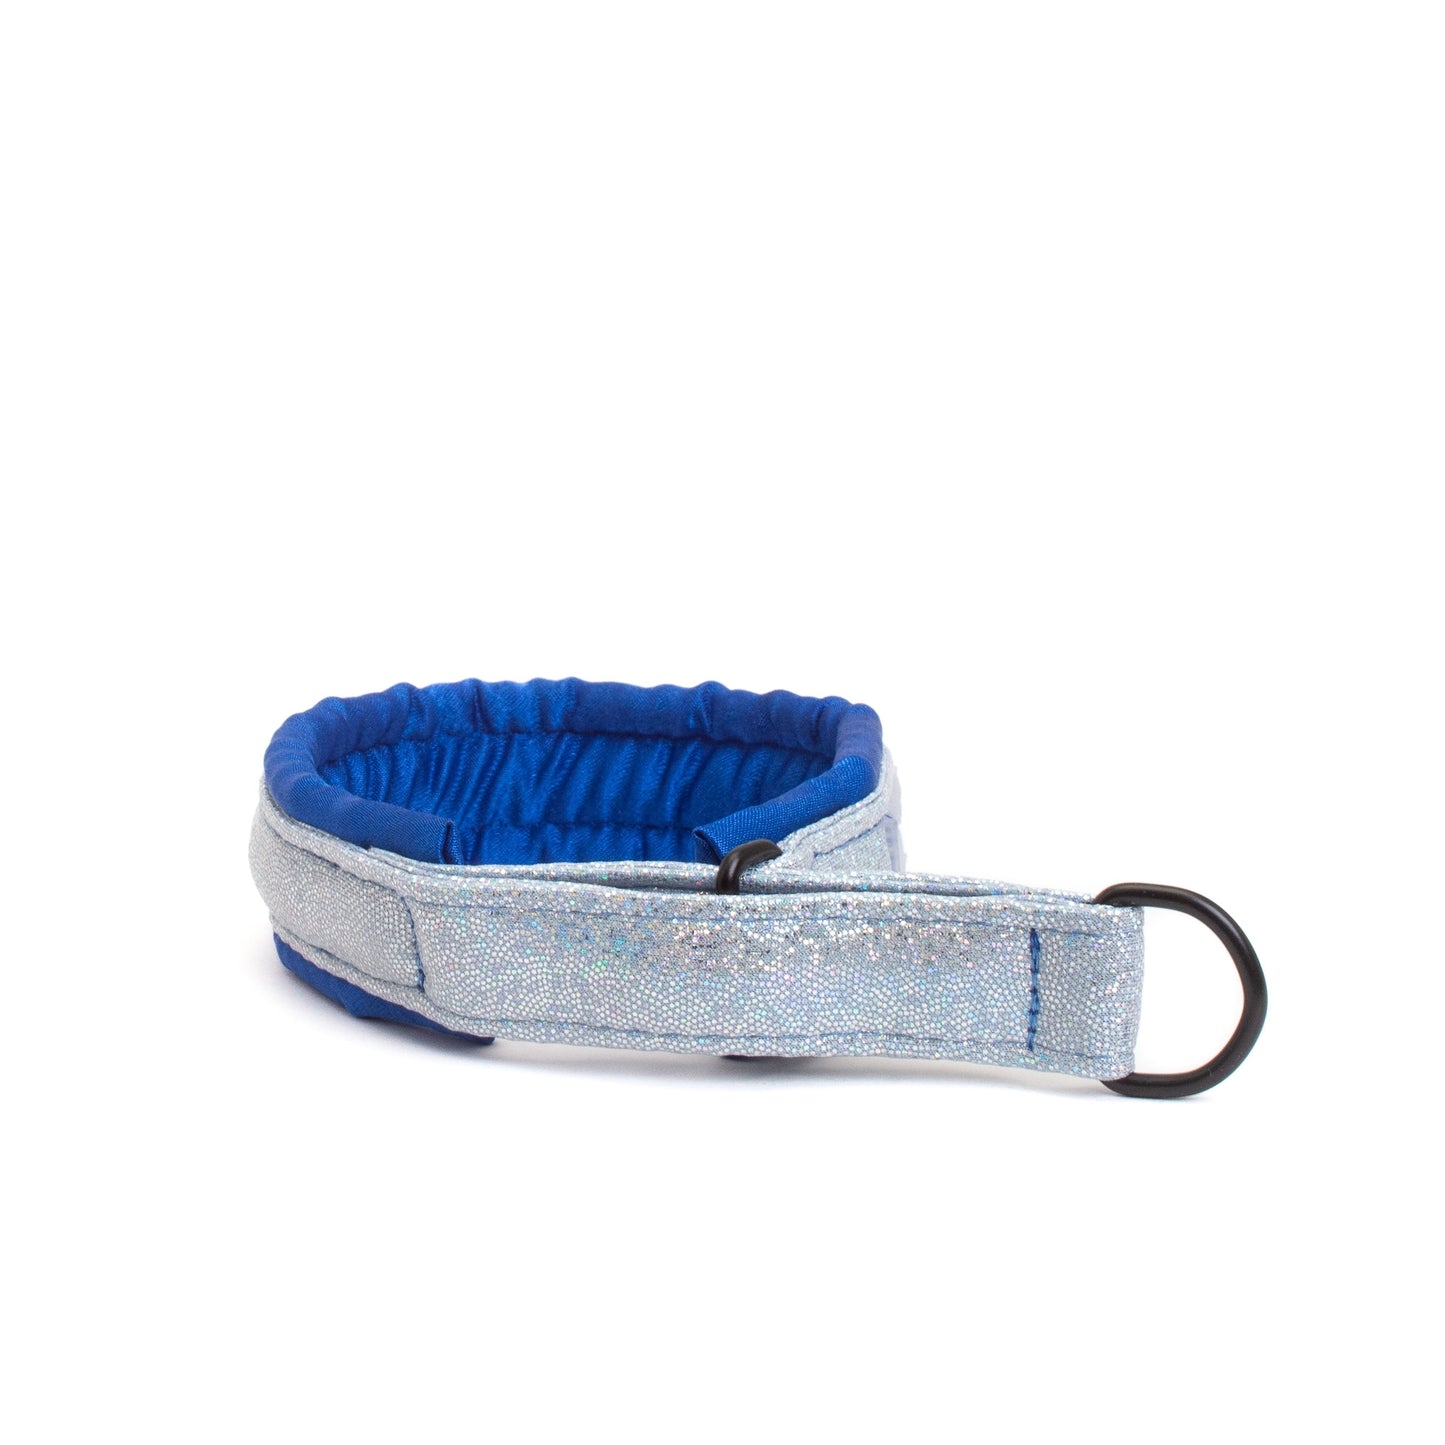 Small / Medium / Large Martingale Collar Poodle Supply Royal Blue